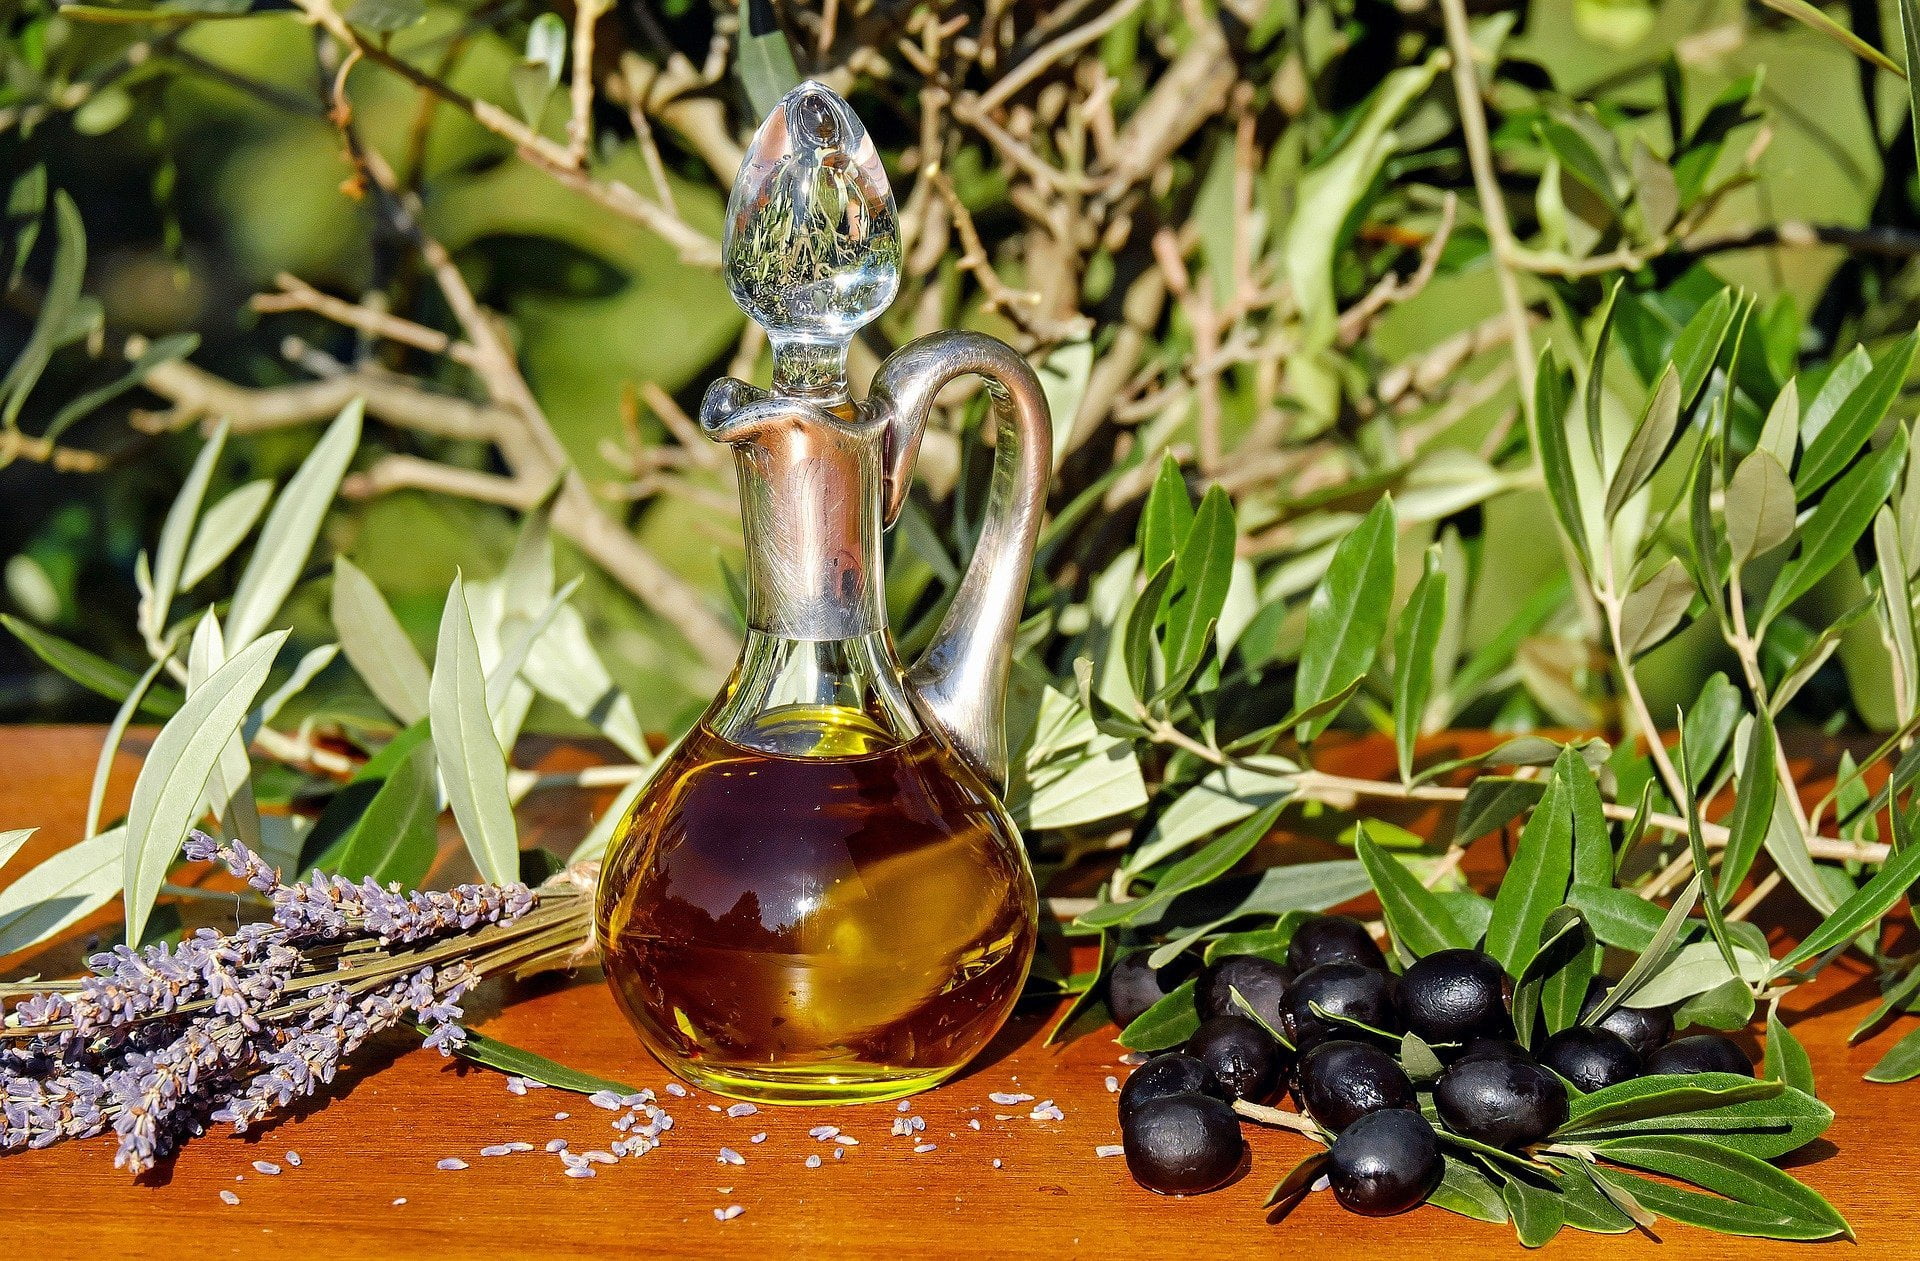 cretan olive oil and olives - cuisine